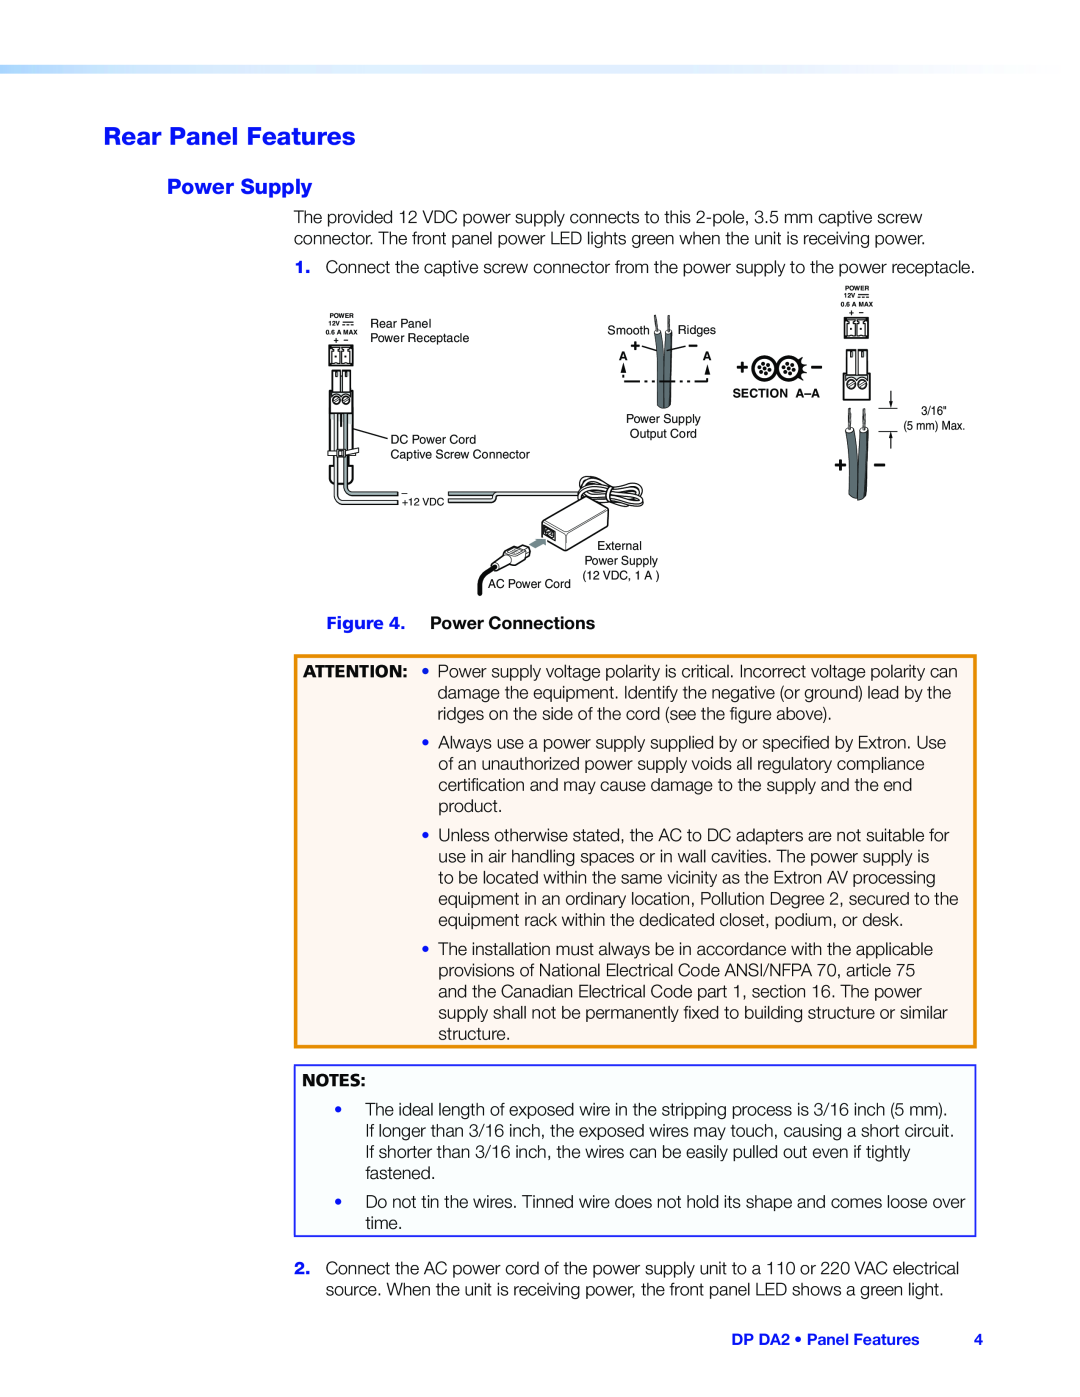 Extron electronic DP DA2 manual Rear Panel Features, Power Supply 